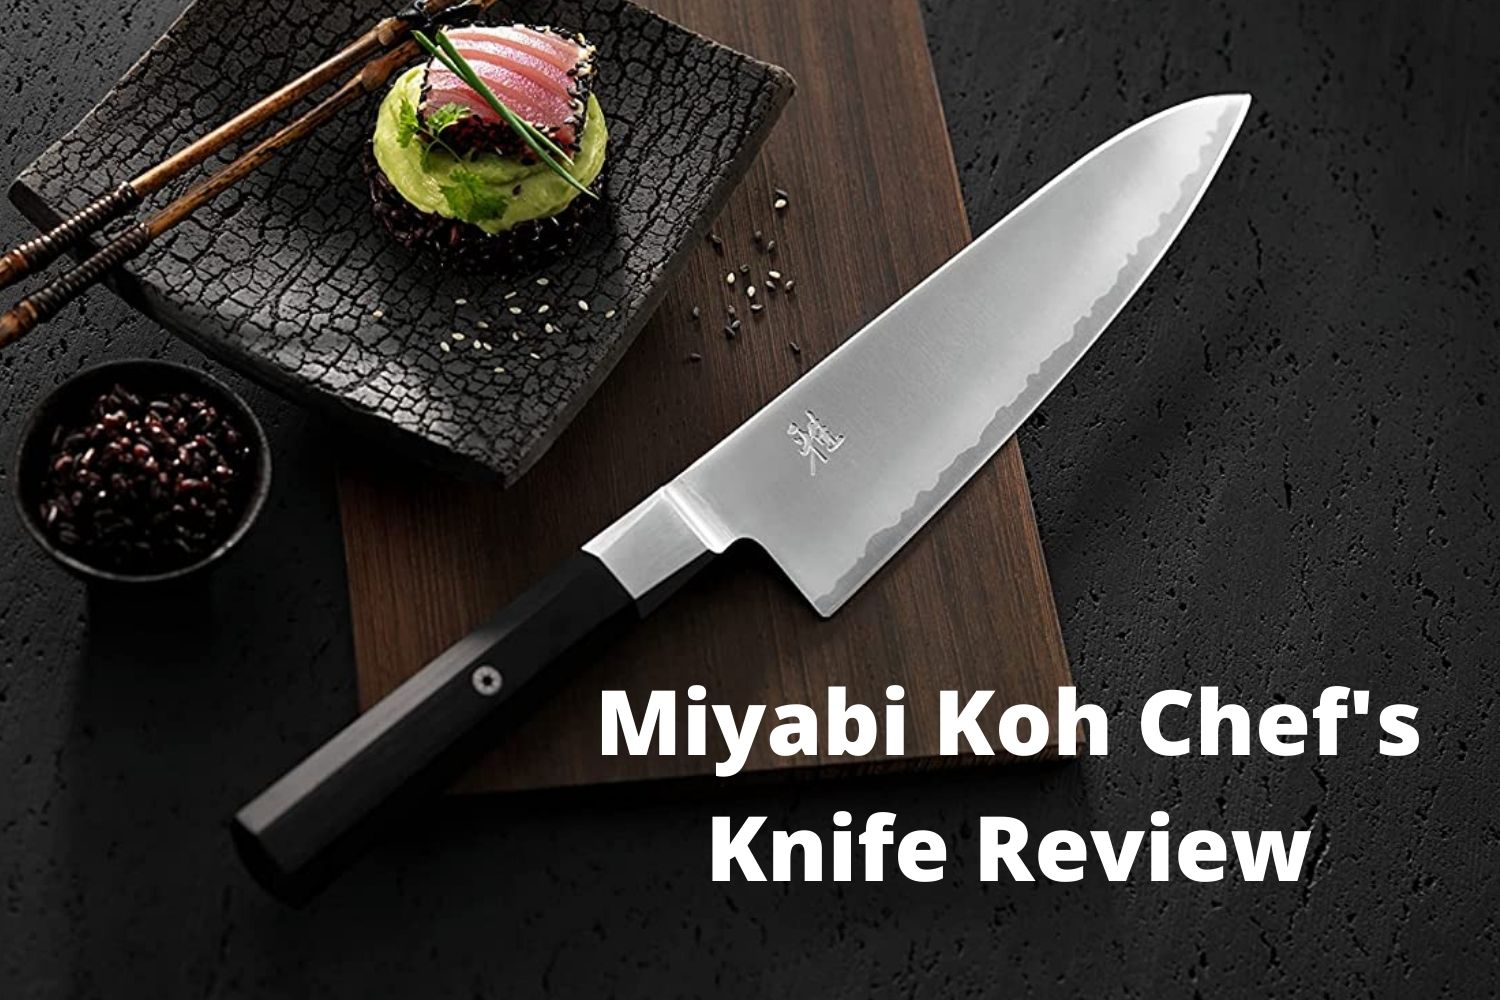 miyabi koh chef knife review